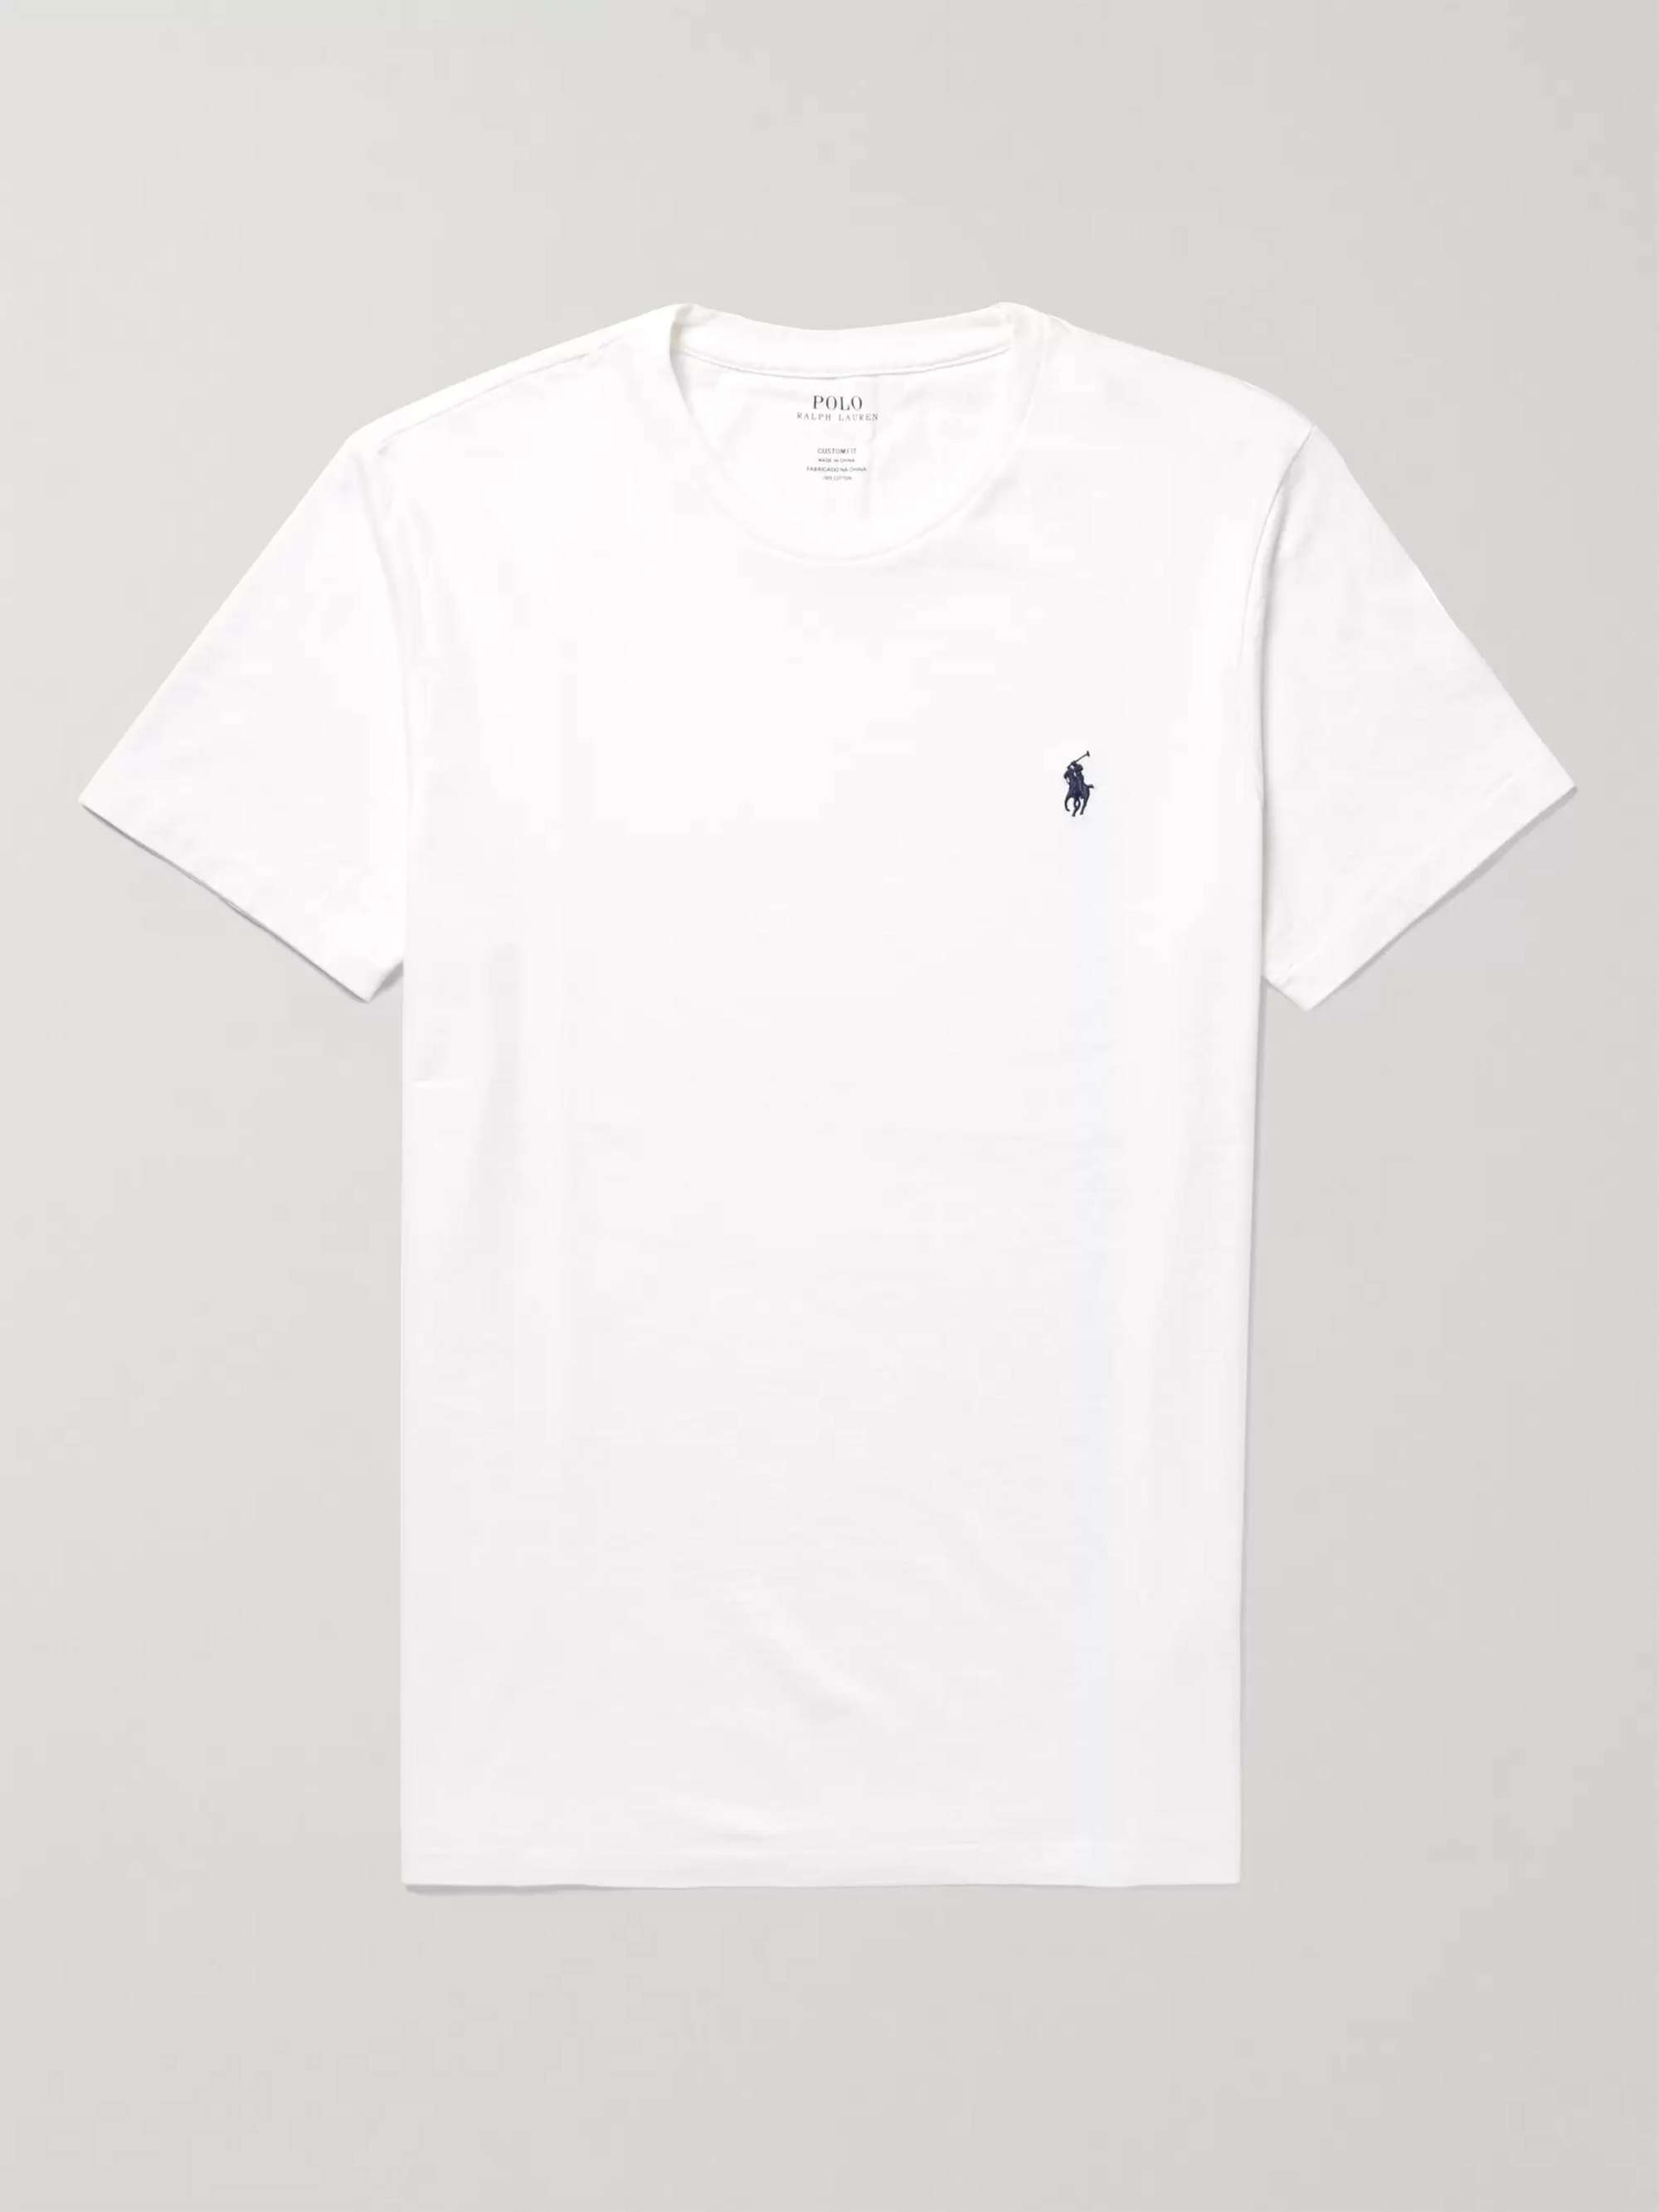 falme Underholdning ris POLO RALPH LAUREN Slim-Fit Cotton-Jersey T-Shirt for Men | MR PORTER